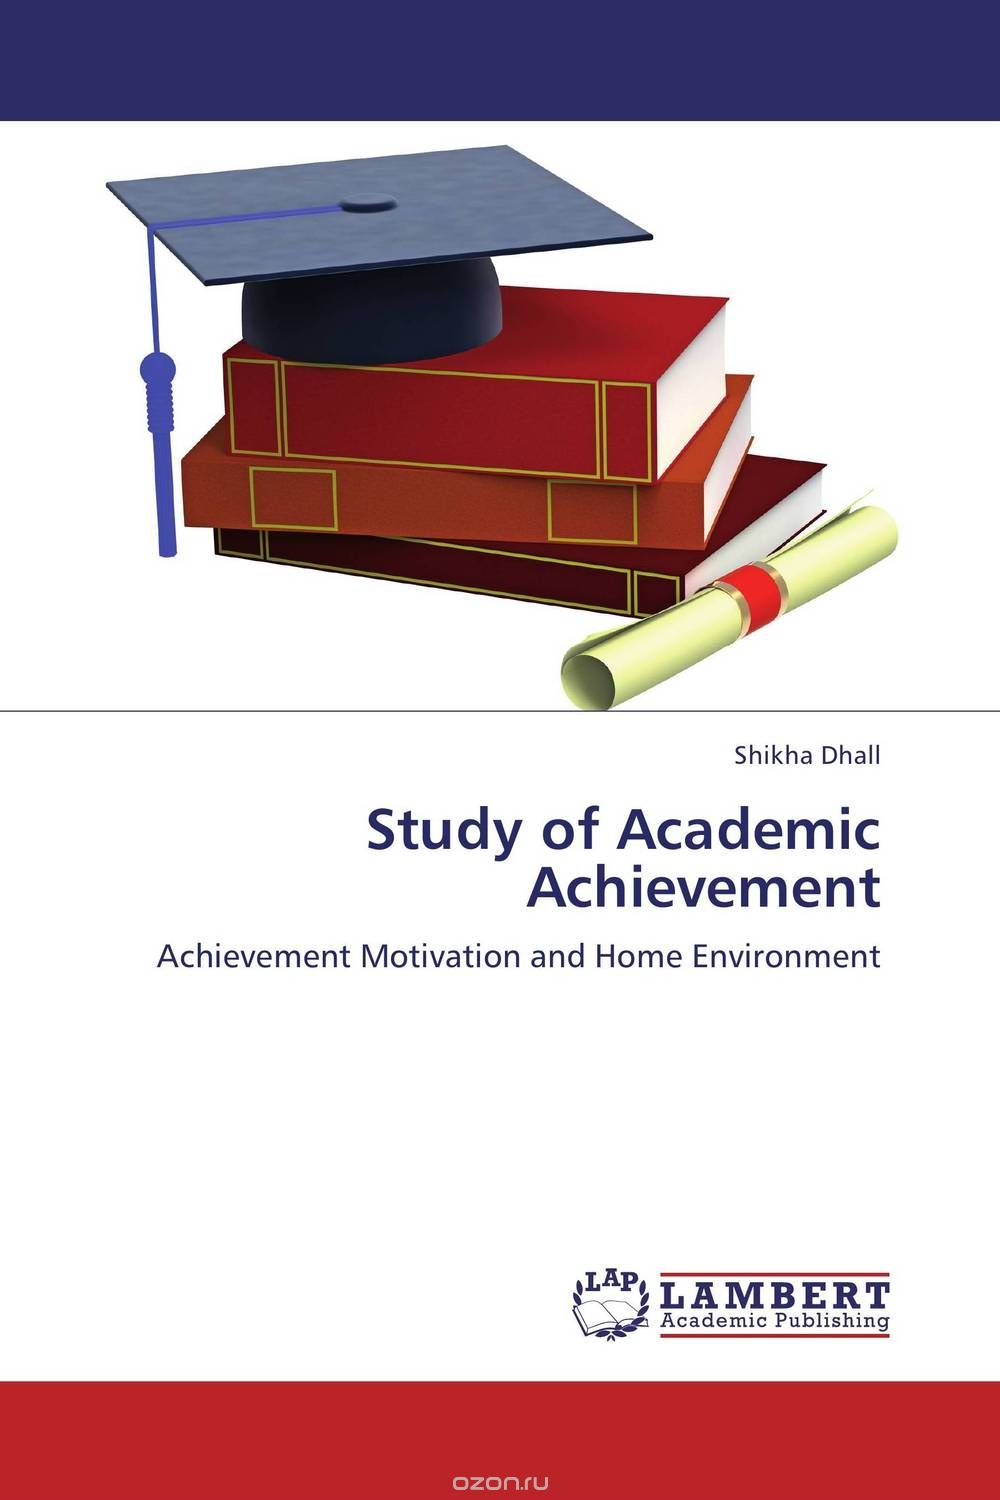 Скачать книгу "Study of Academic Achievement"